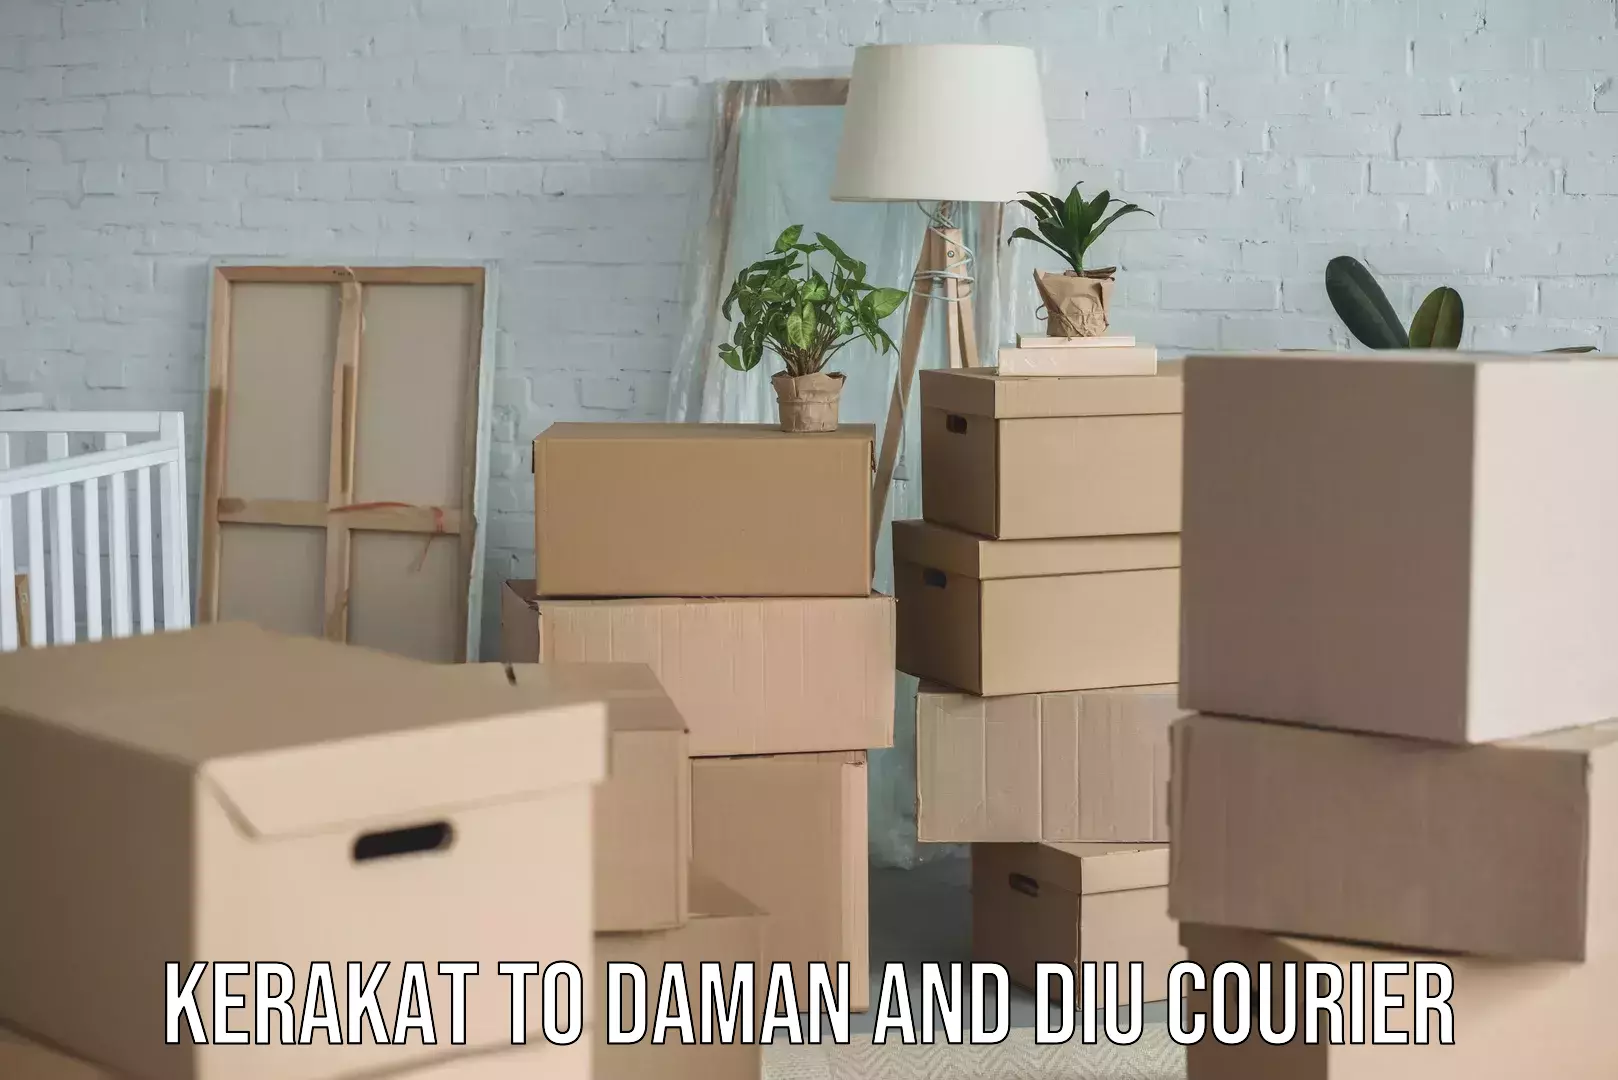 Efficient moving and packing Kerakat to Daman and Diu